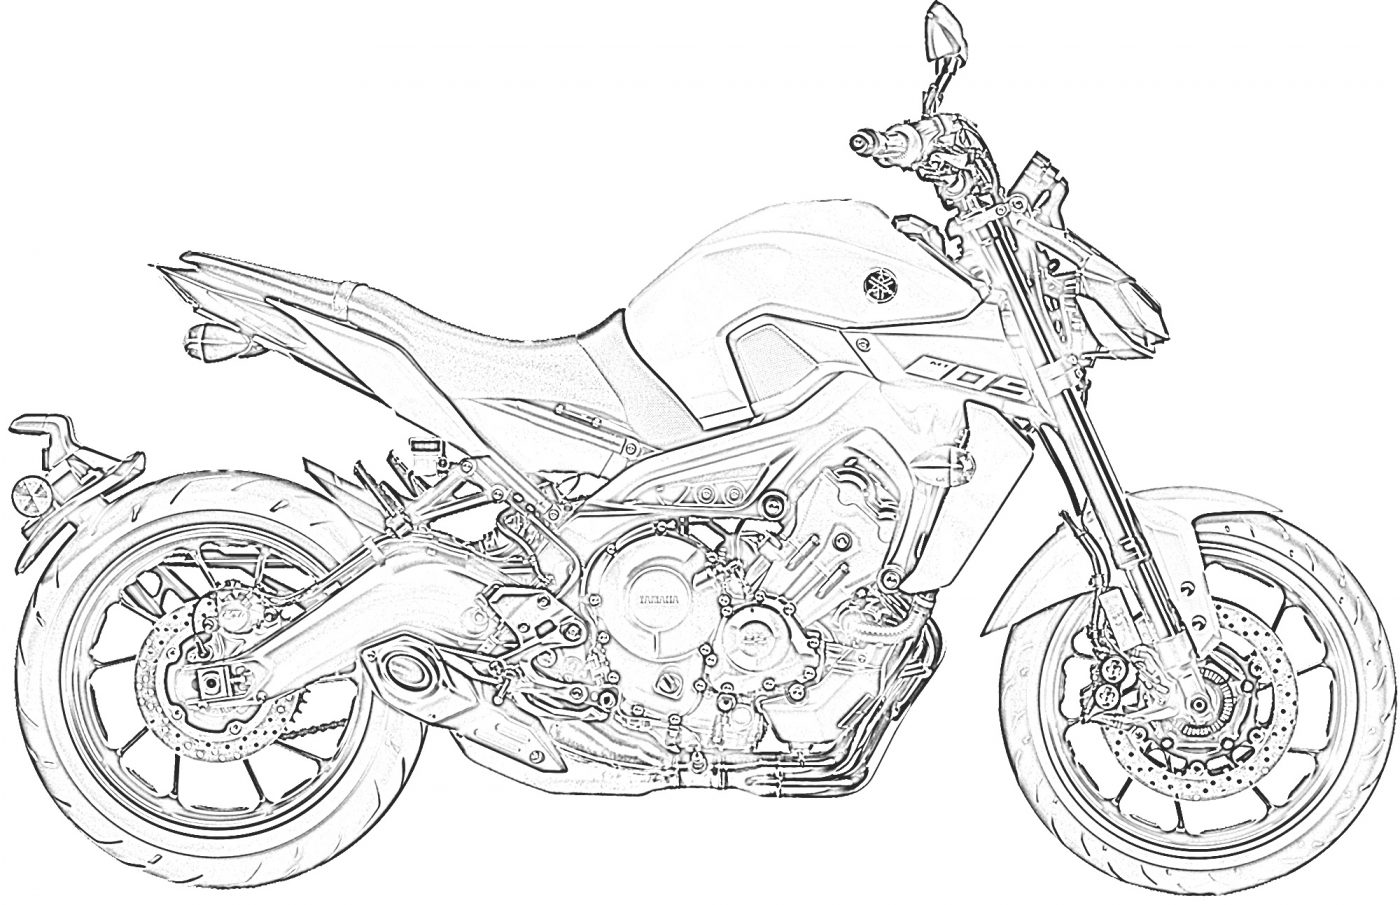 Suzuki motorcycle coloring page | | BestAppsForKids.com